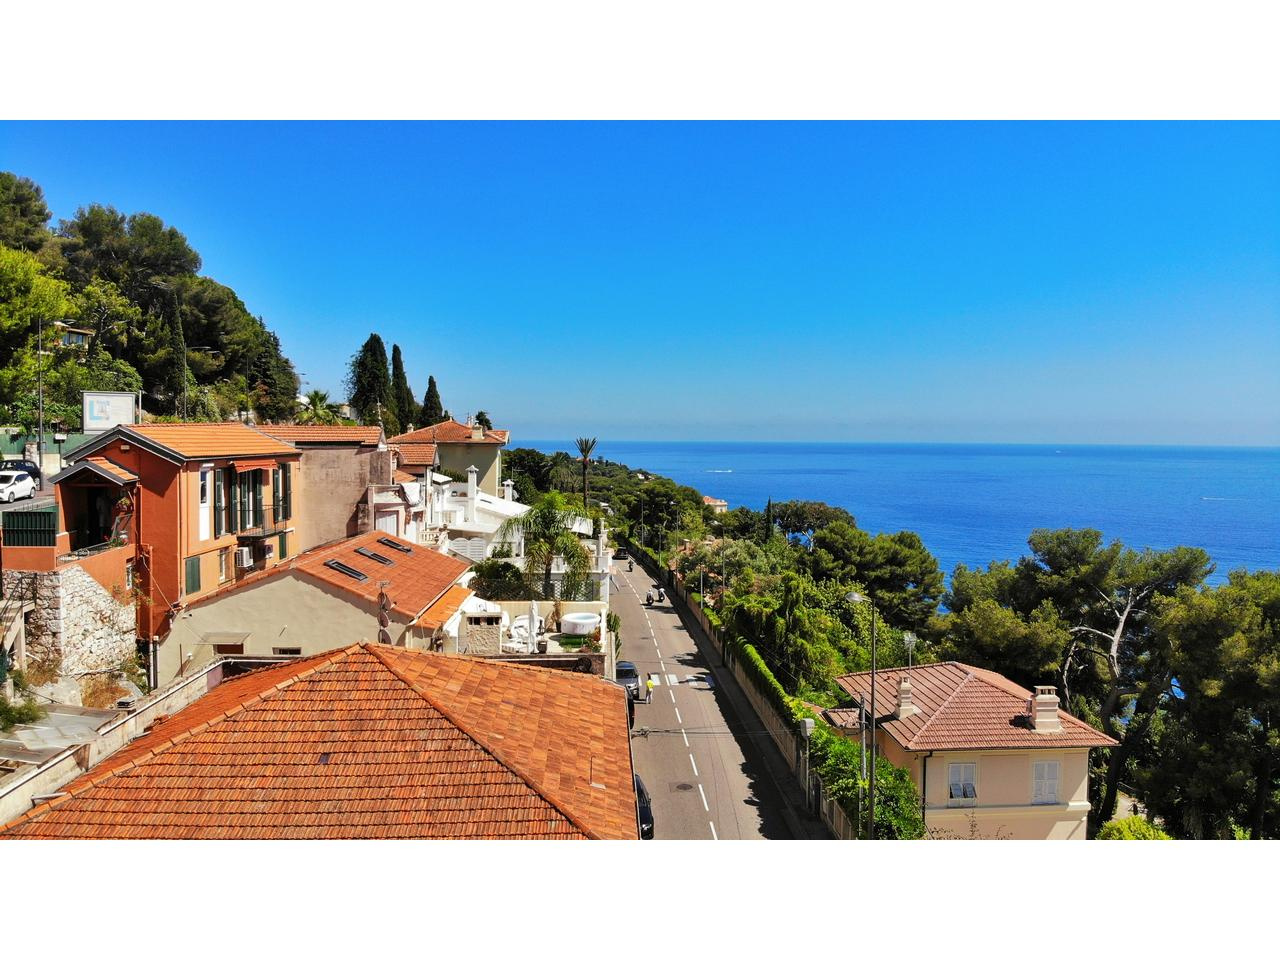 Offres de vente maison Roquebrune-Cap-Martin (06190)